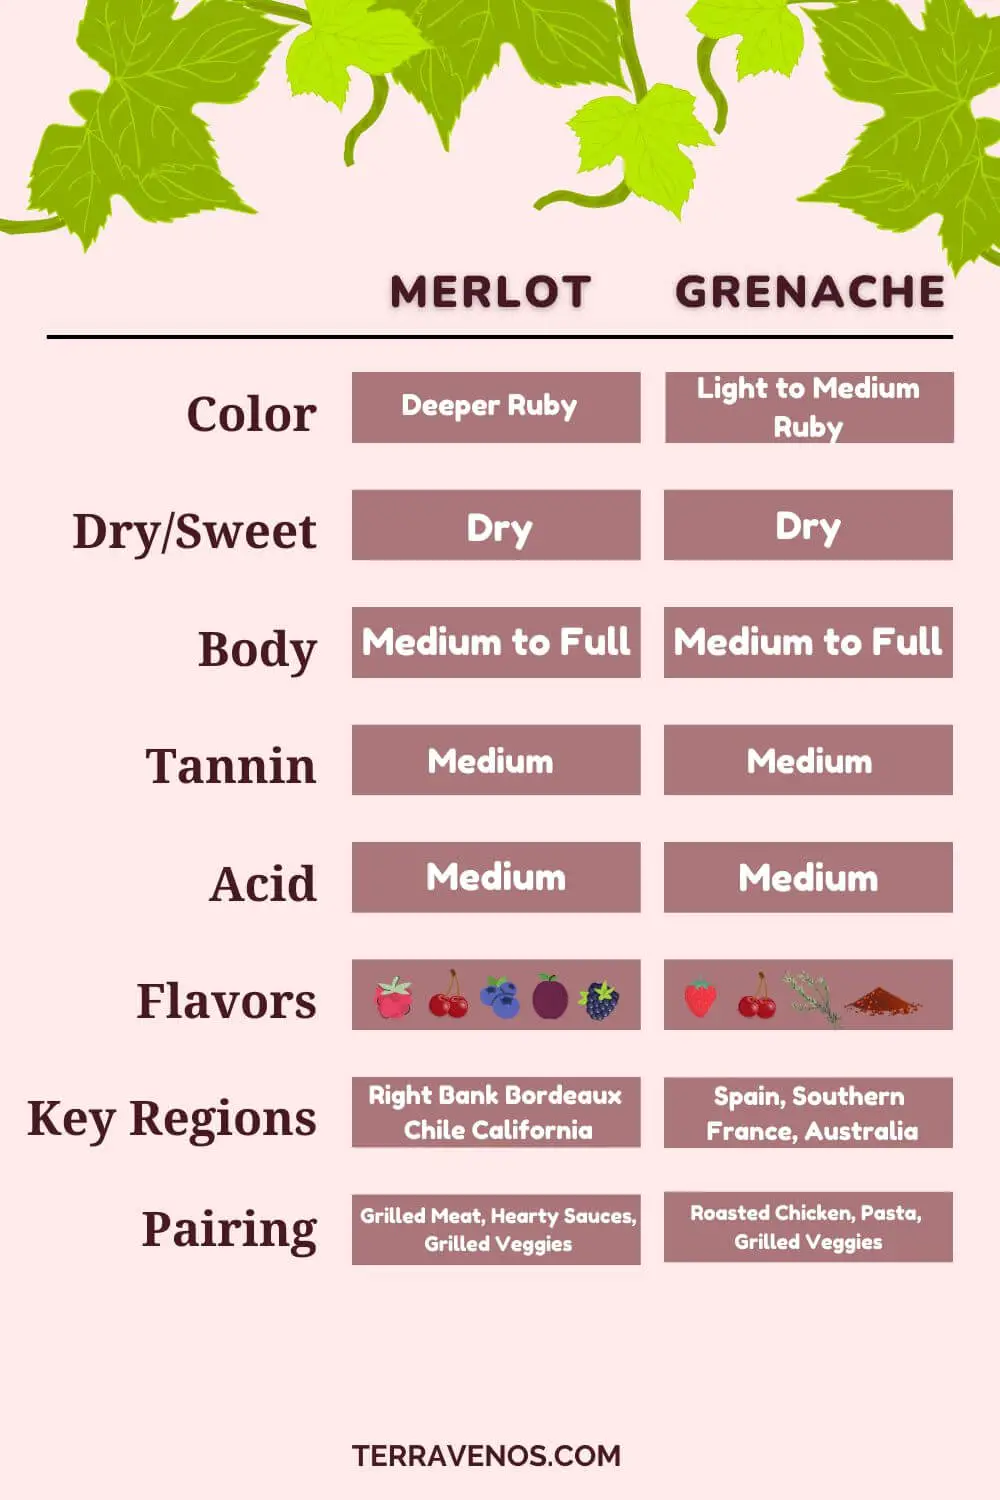 grenache vs merlot infographic